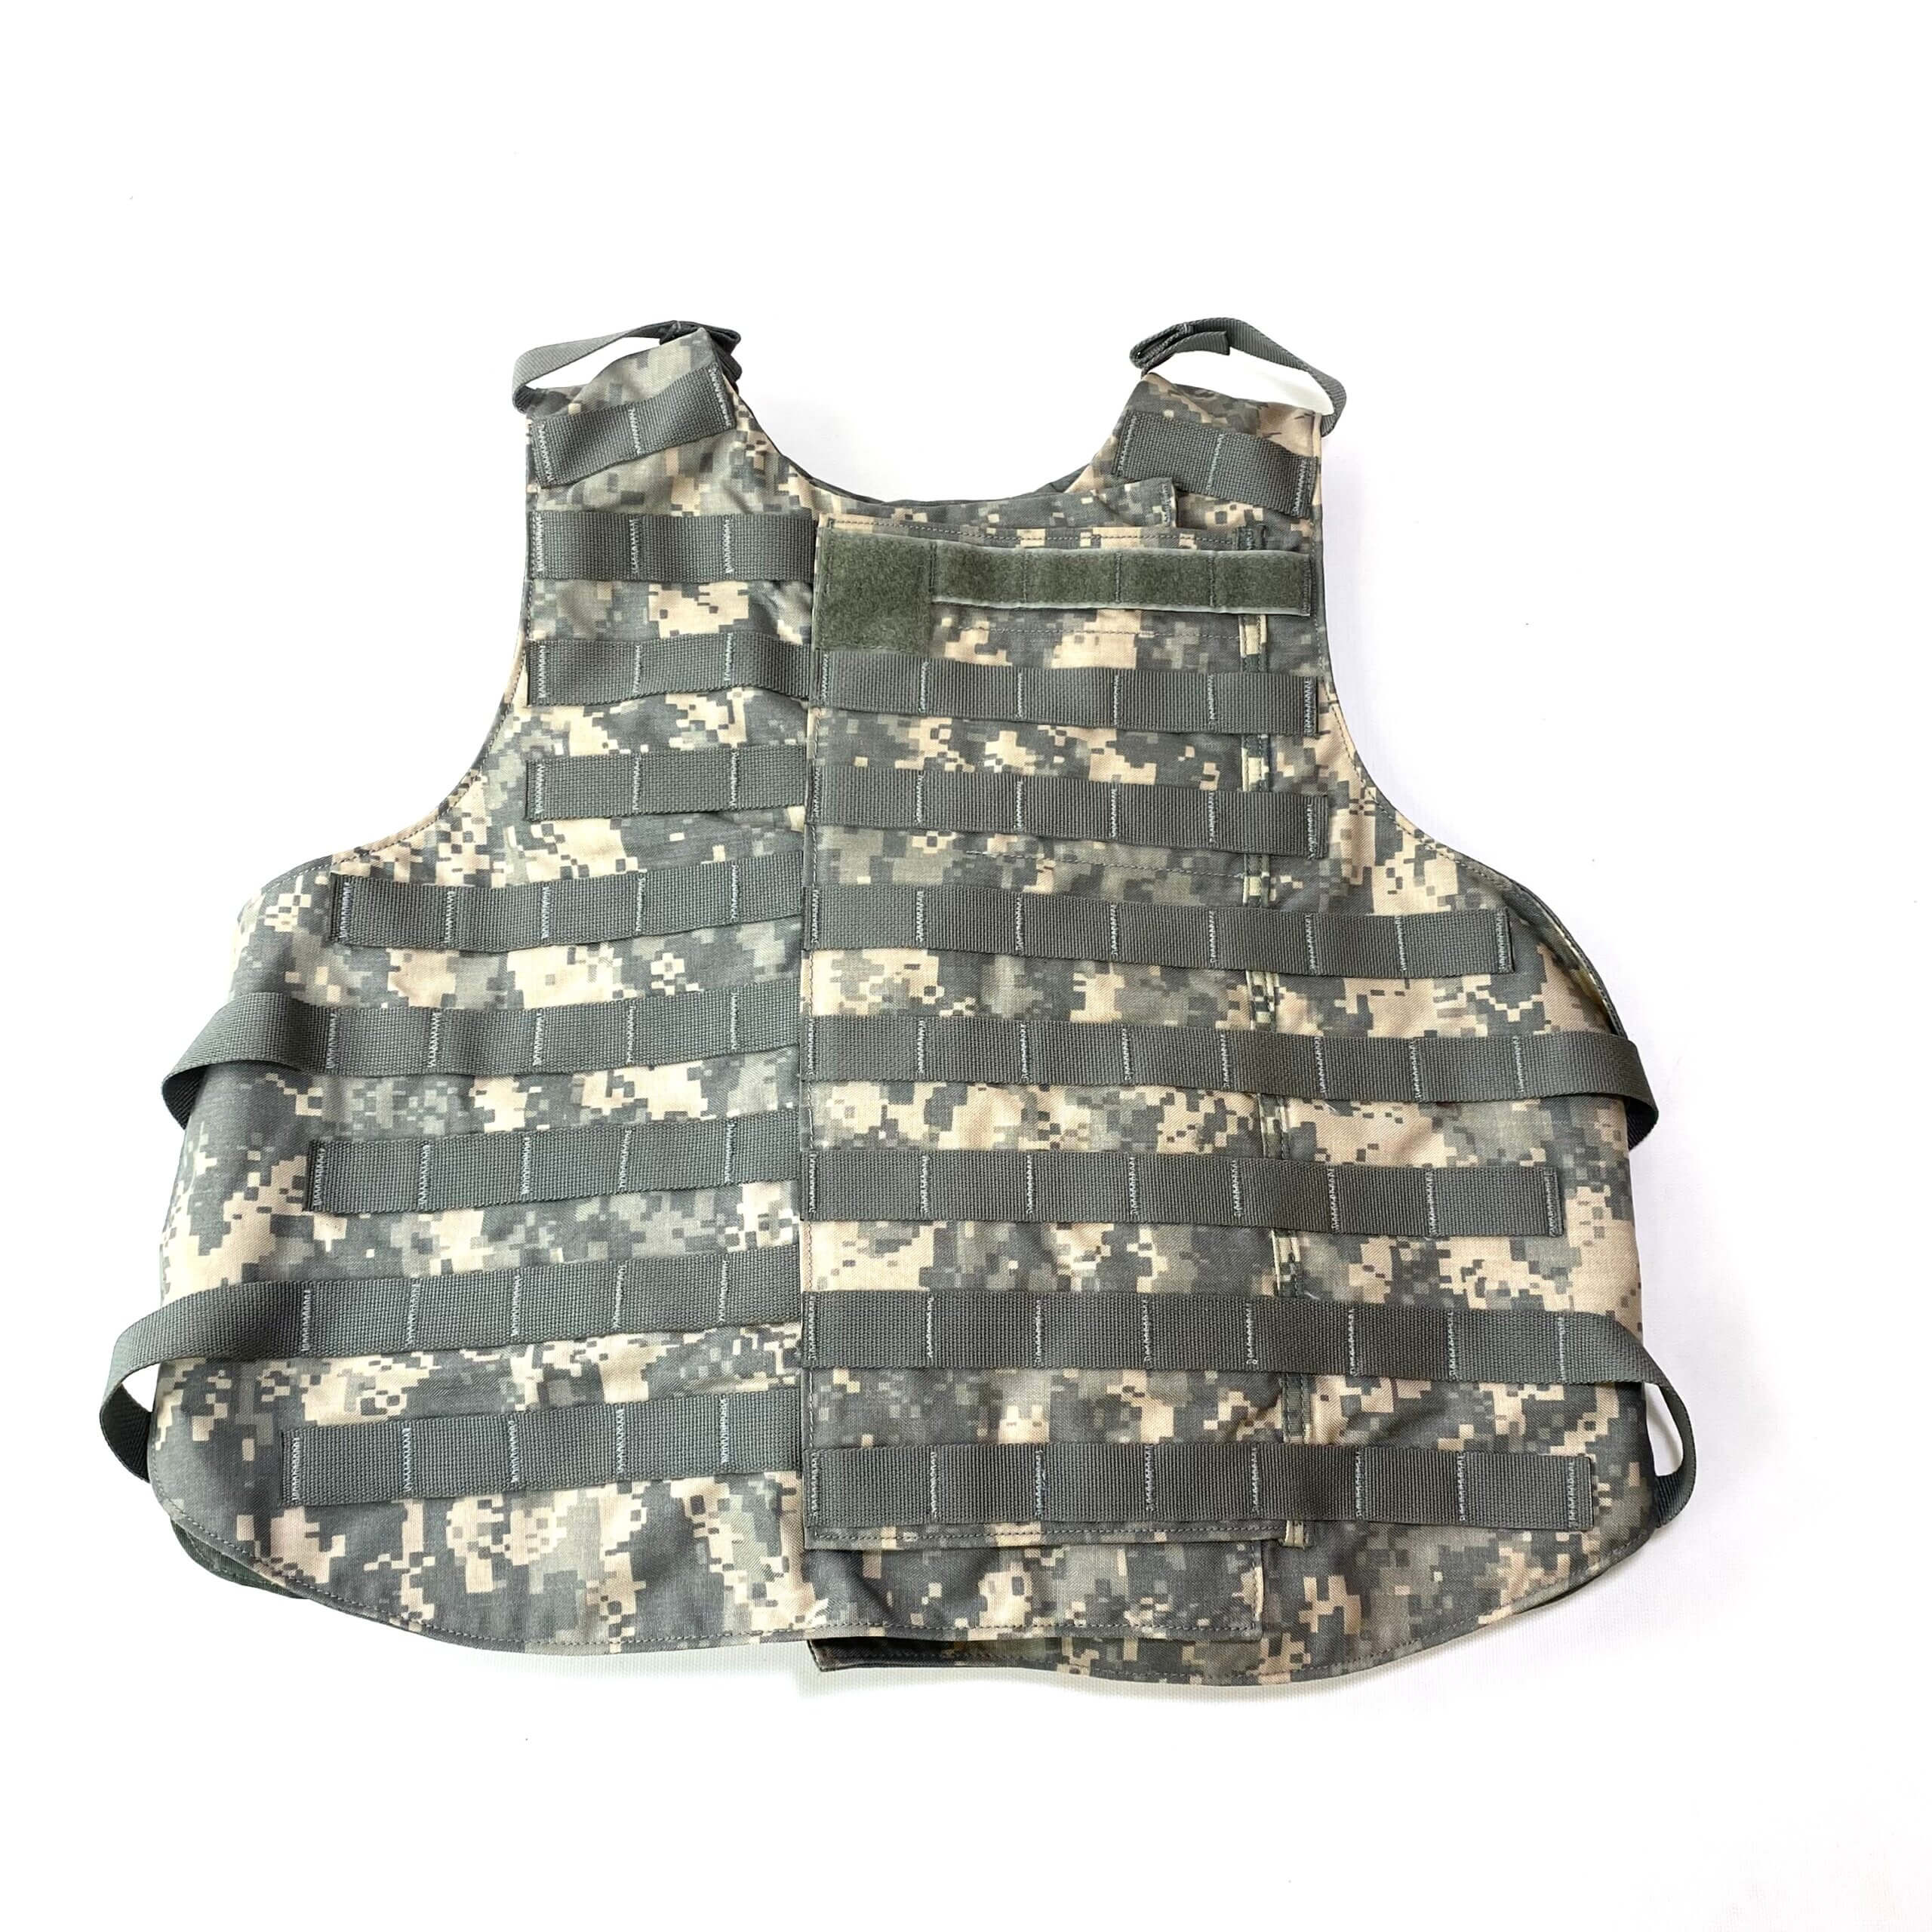 Soldier Kevlar Protection system  Kevlar, Kevlar armor, Combat shirt